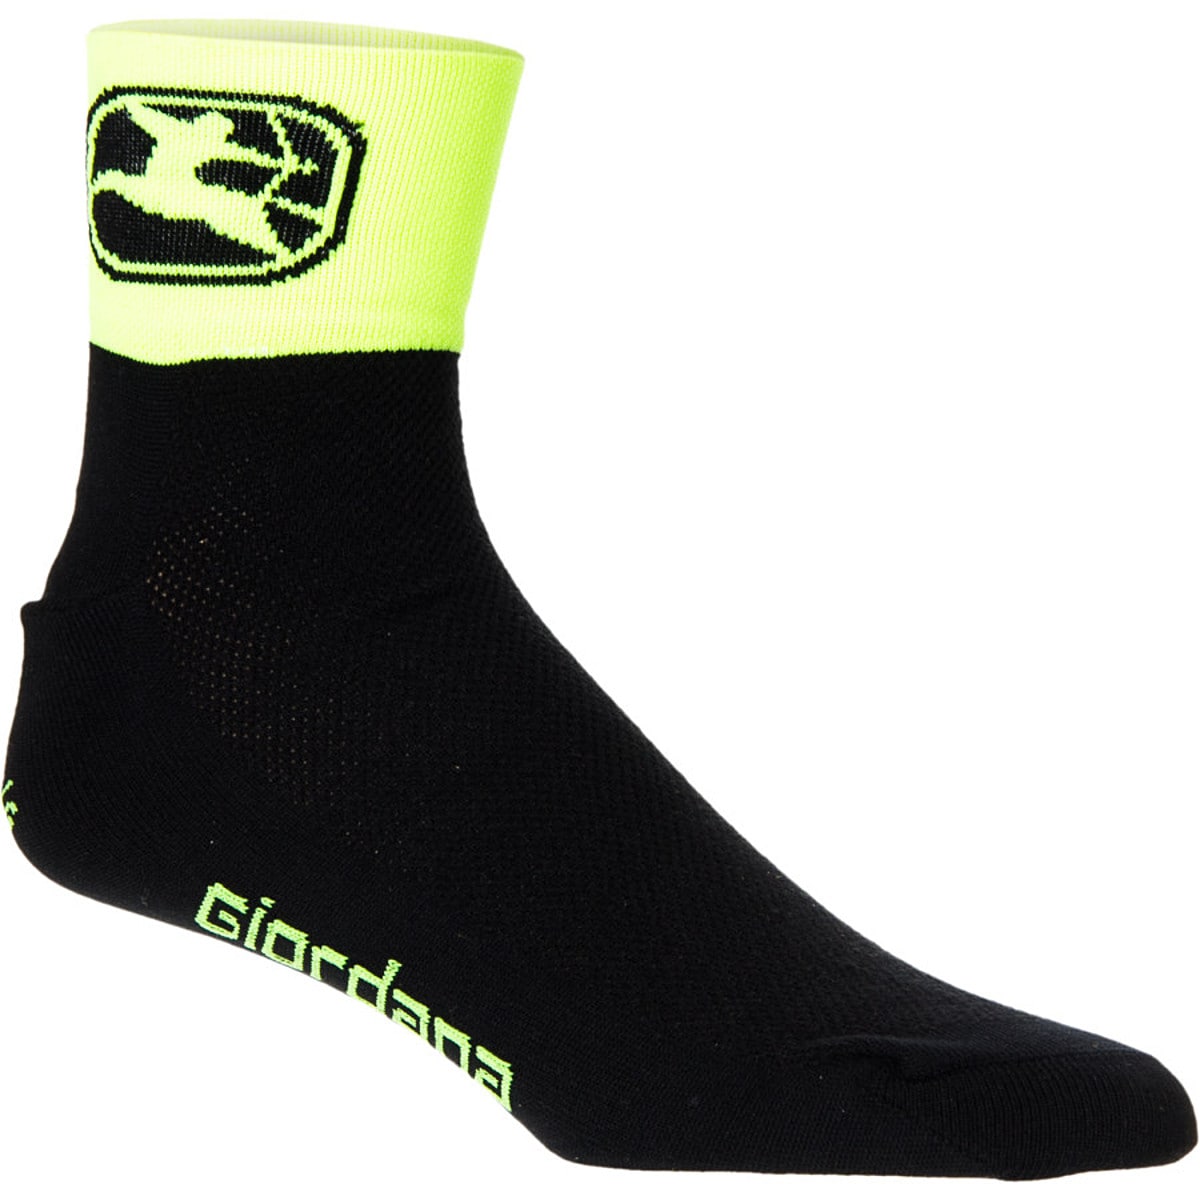 Giordana Classic Trade Mid Cuff Socks - Men's